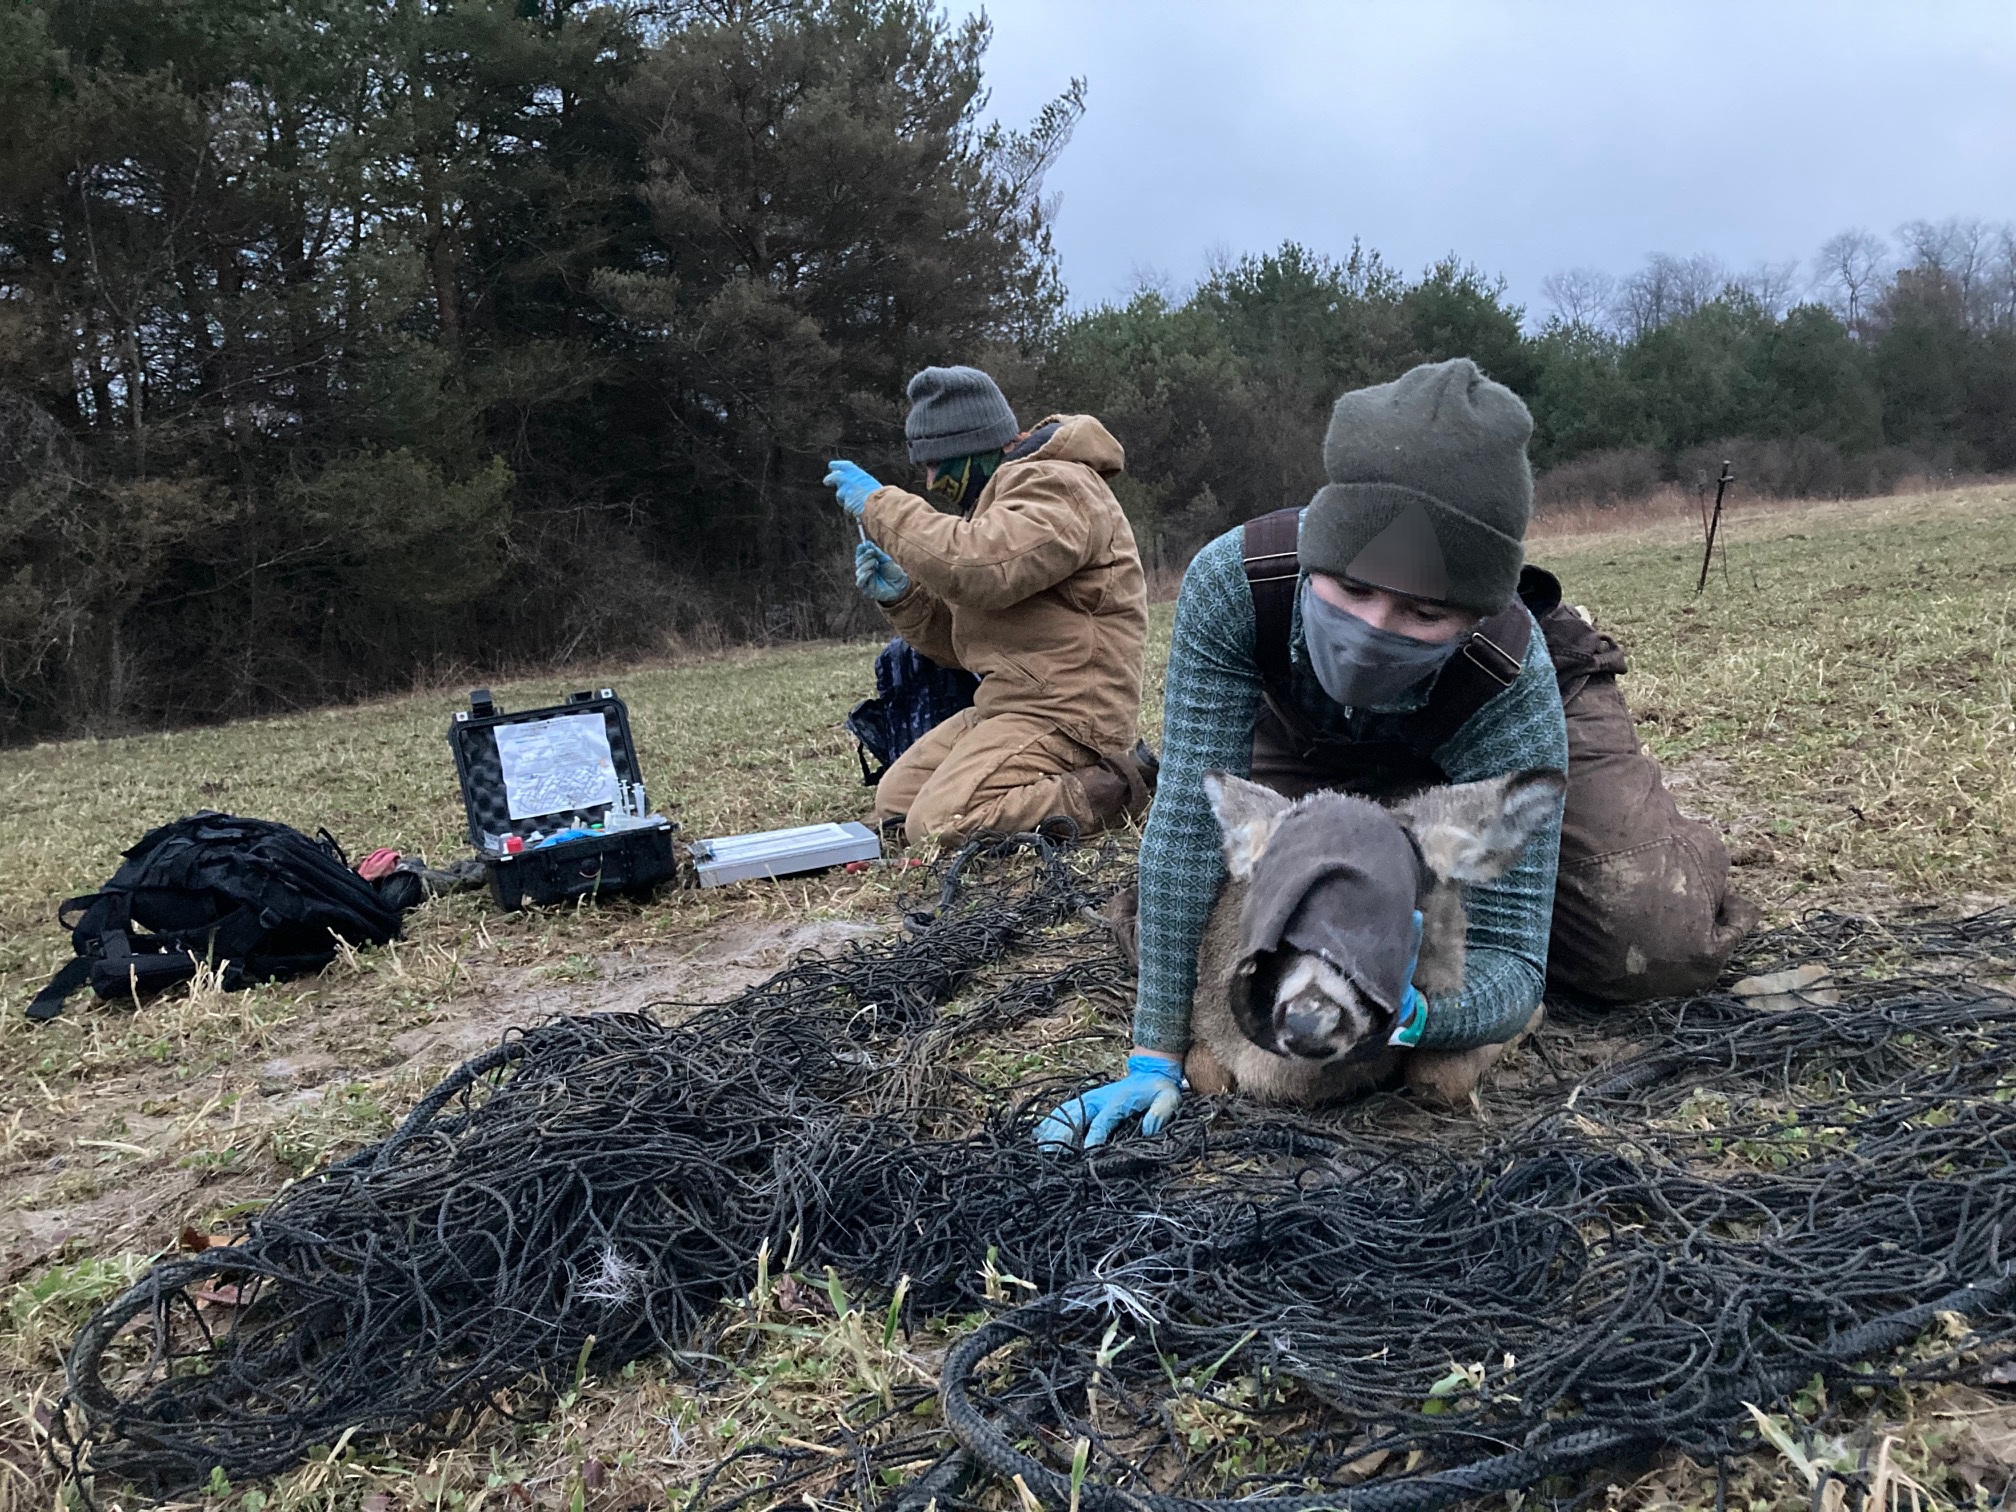 Field crew member sitting on deer to restrain under drop net